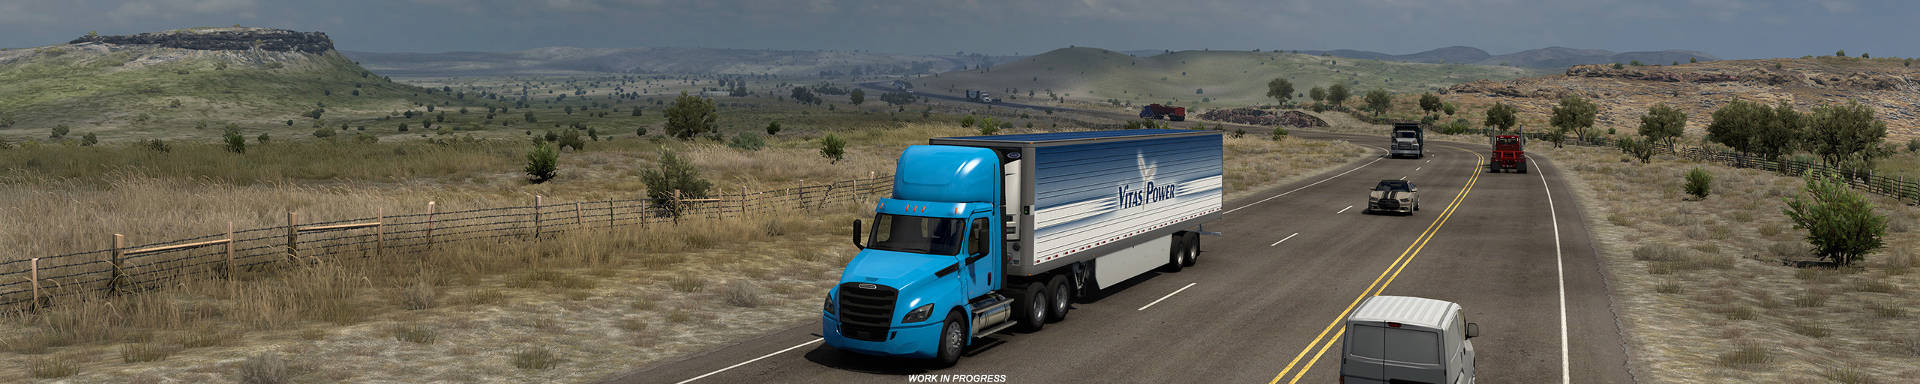 American Truck Simulator Texas DLC slice